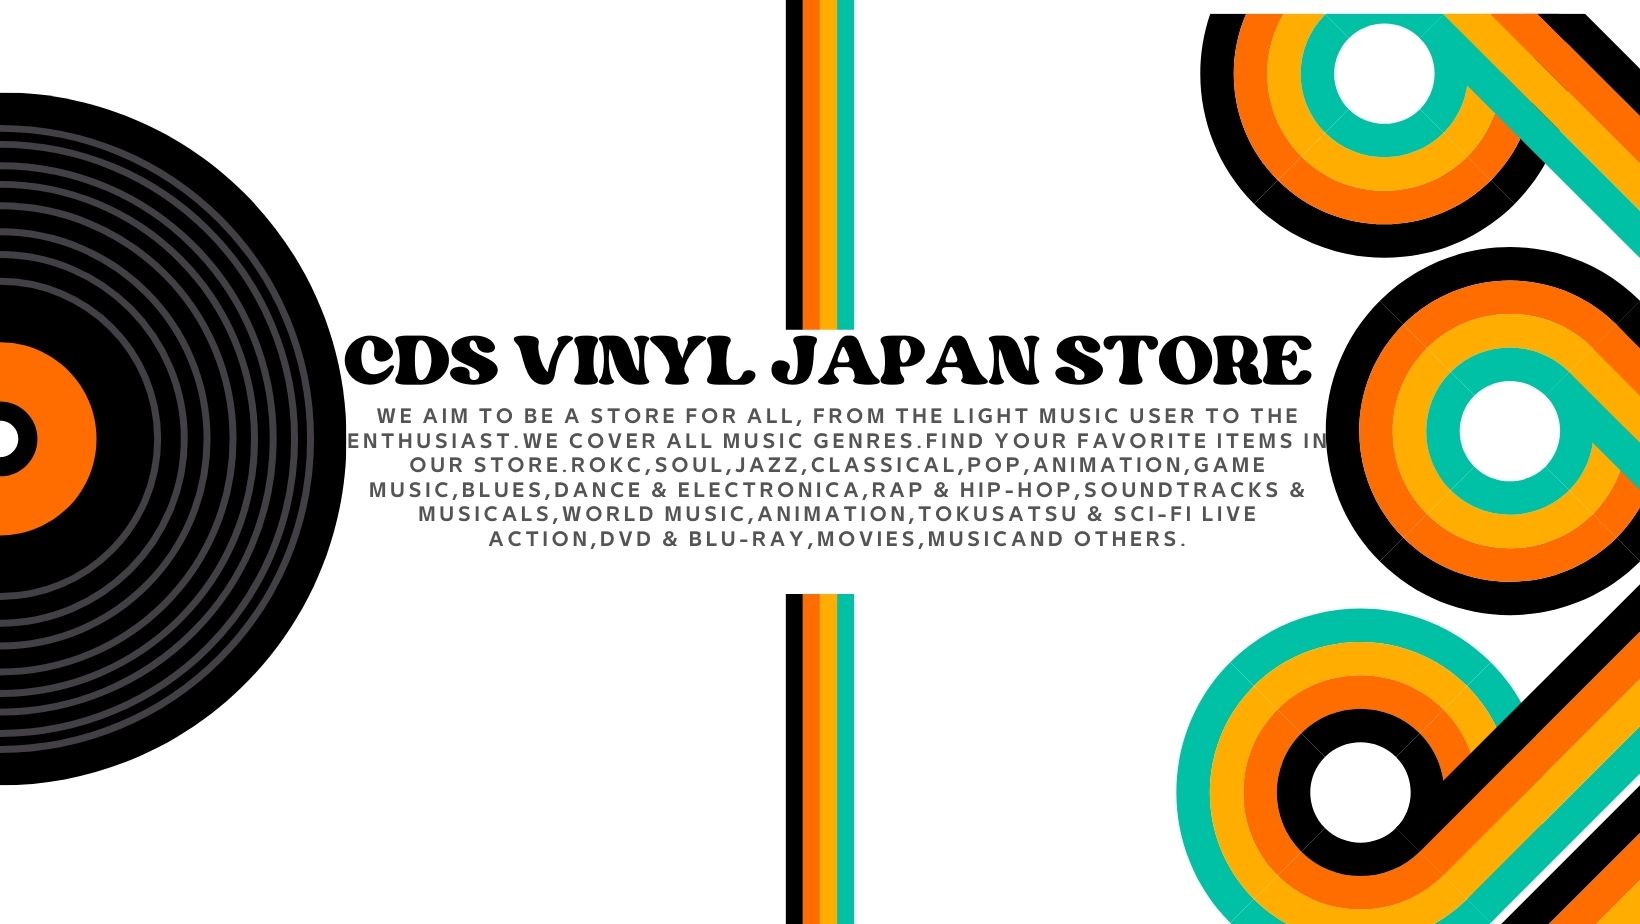 CDs Vinyl Japan Store